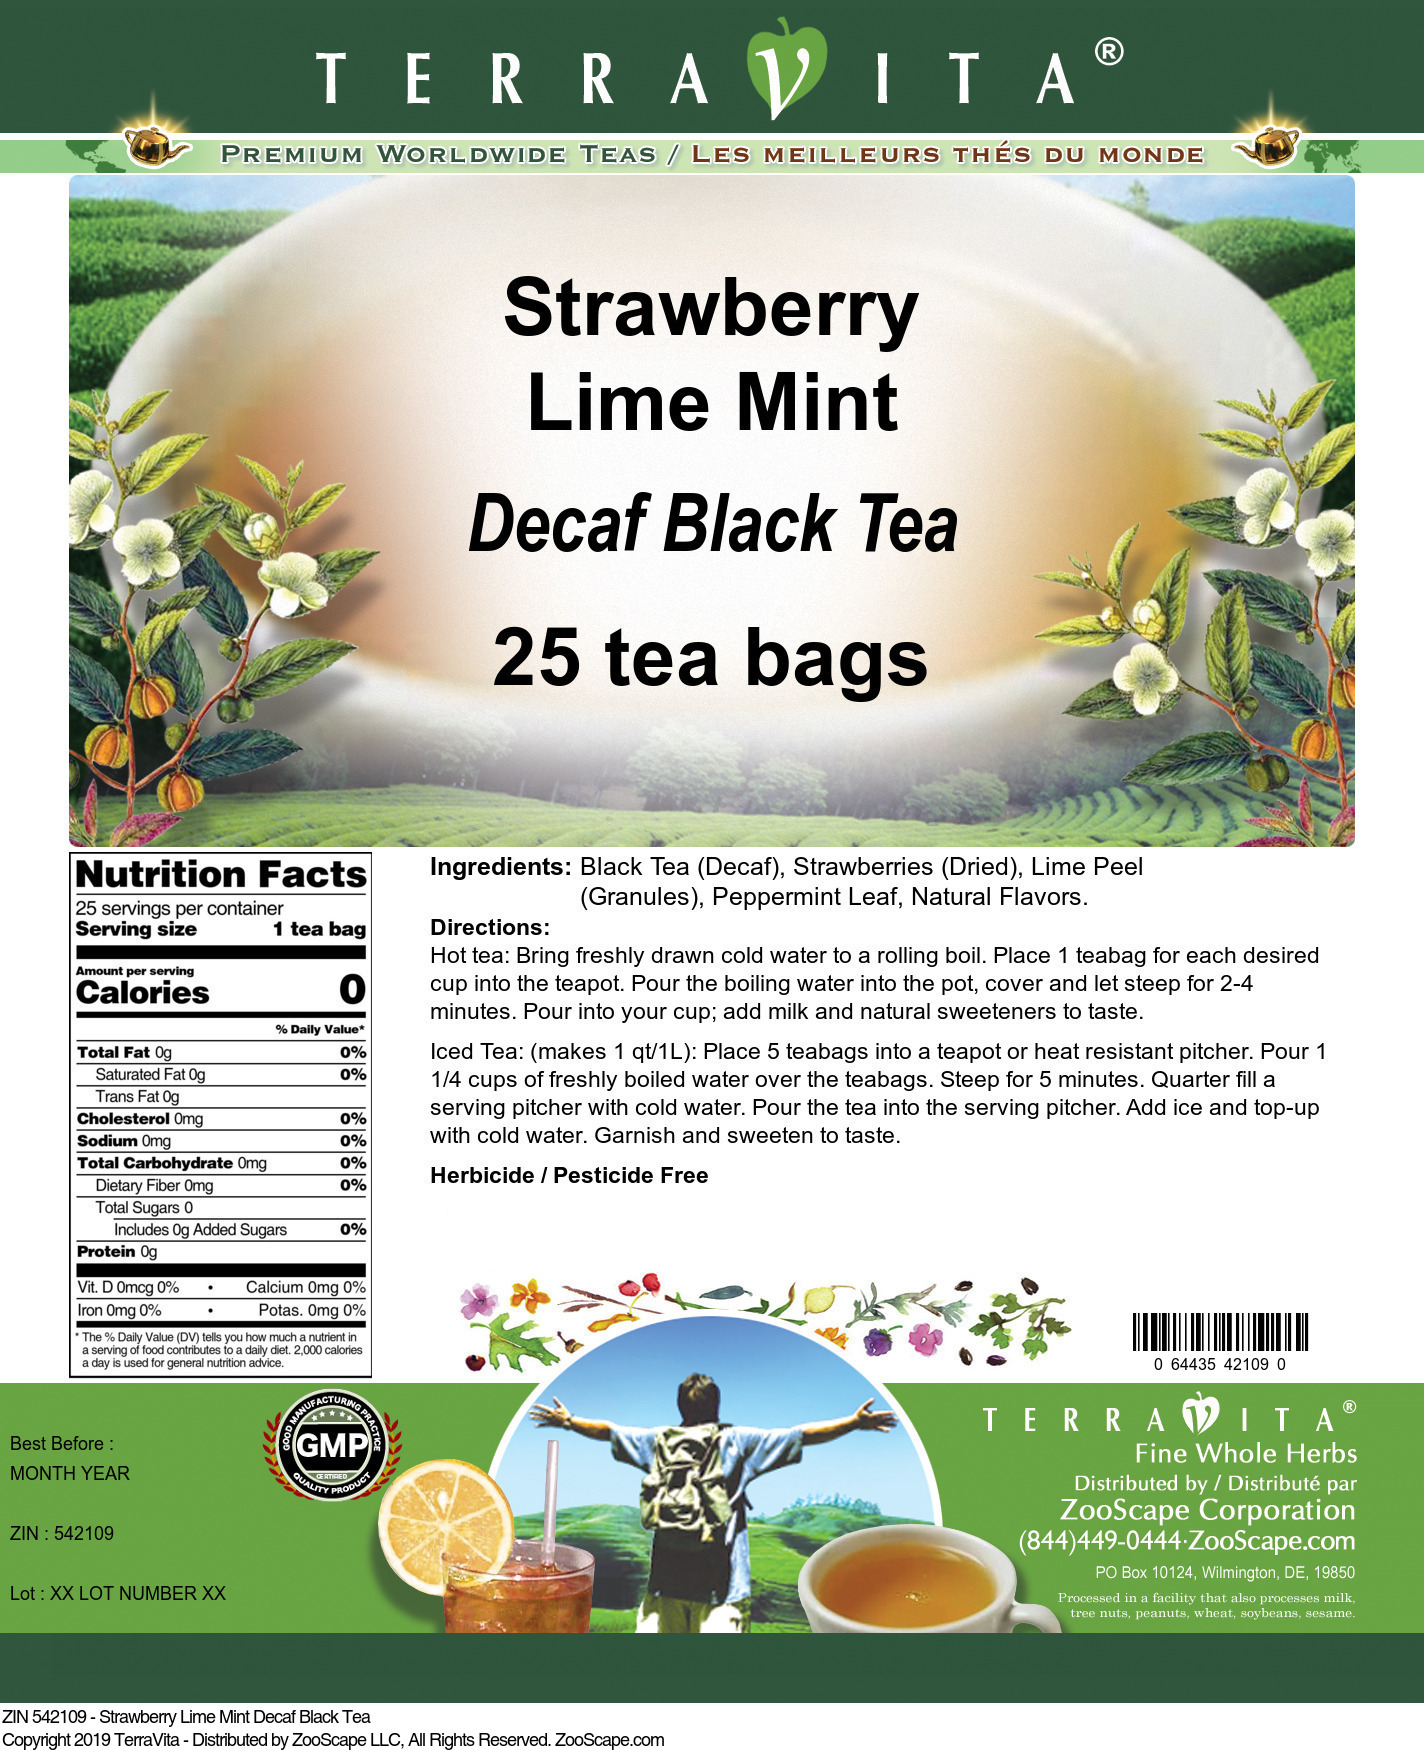 Strawberry Lime Mint Decaf Black Tea - Label